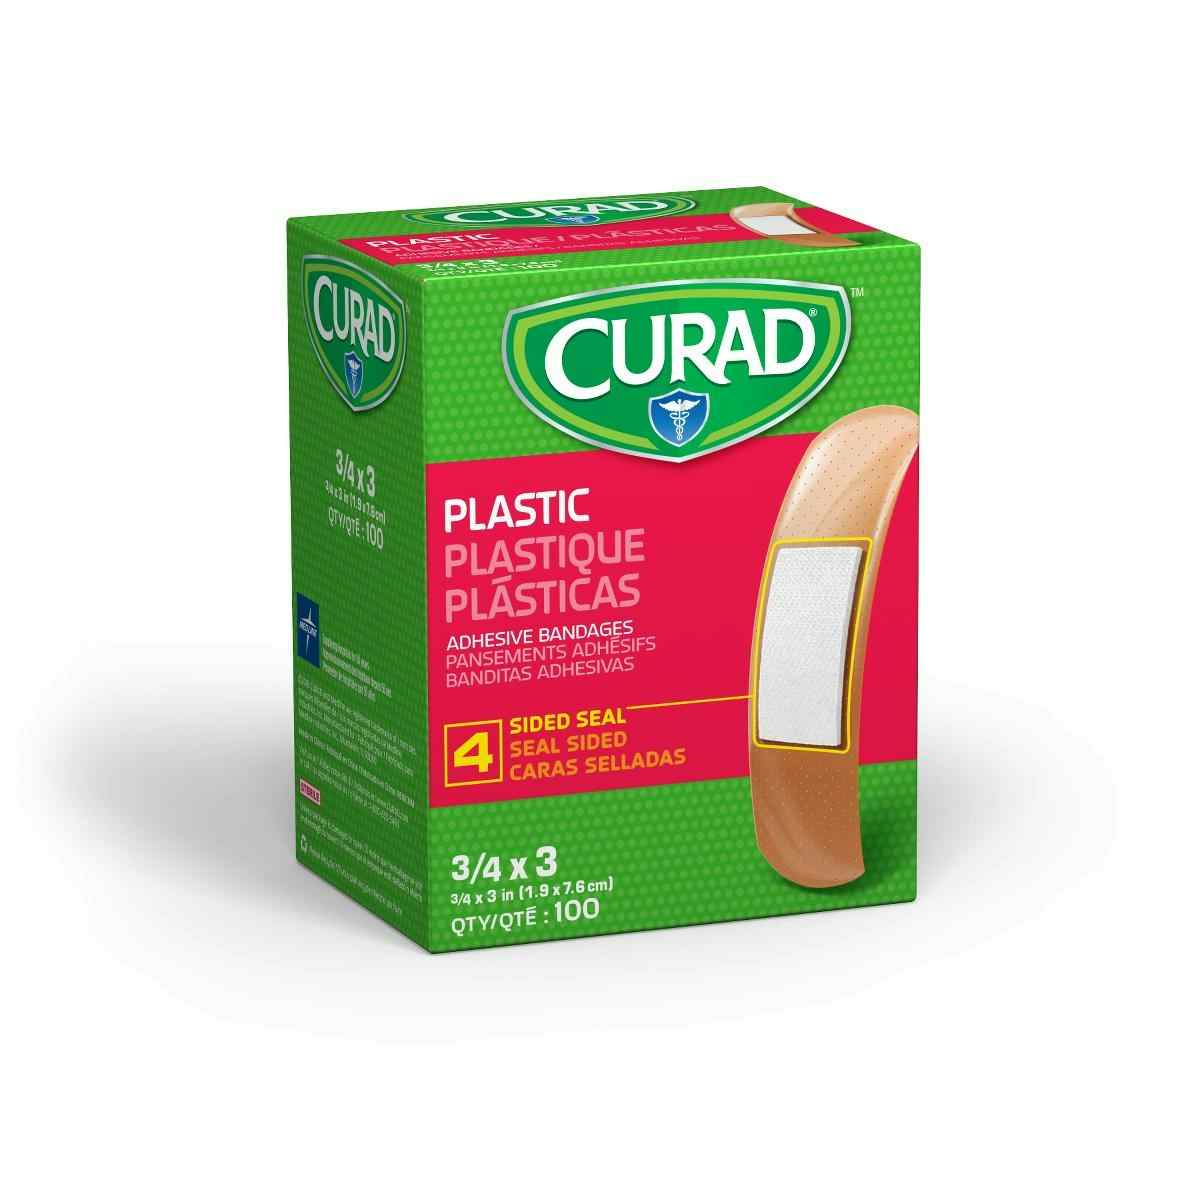 Curad Plastic Adhesive Bandages, NON25500, 3/4" X 3" - Case of 1200